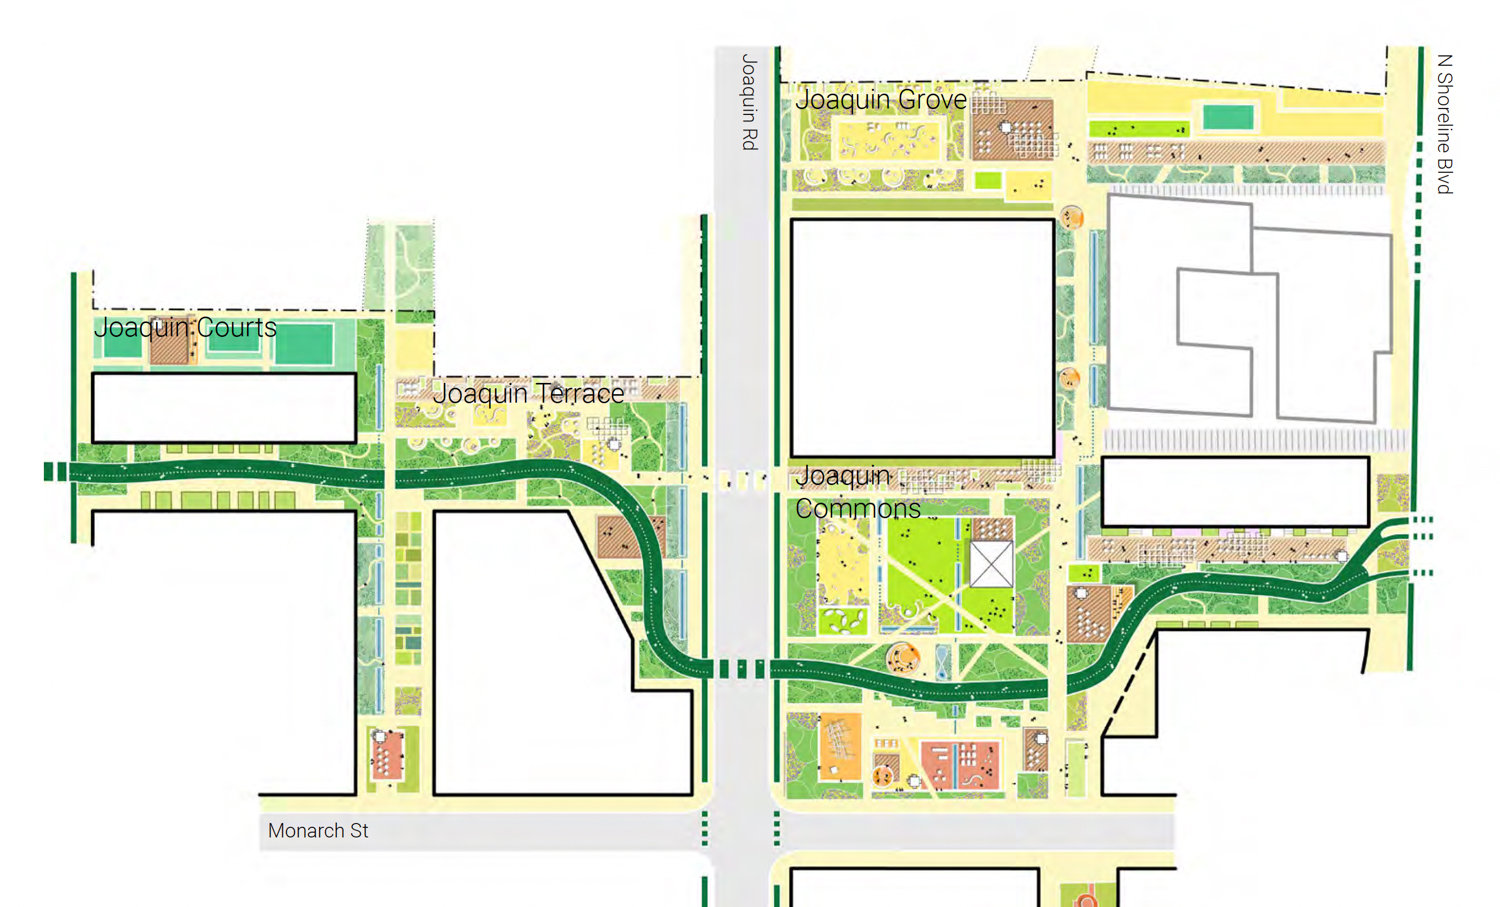 Google North Bayshore Joaquin neighborhood green space, rendering courtesy Google